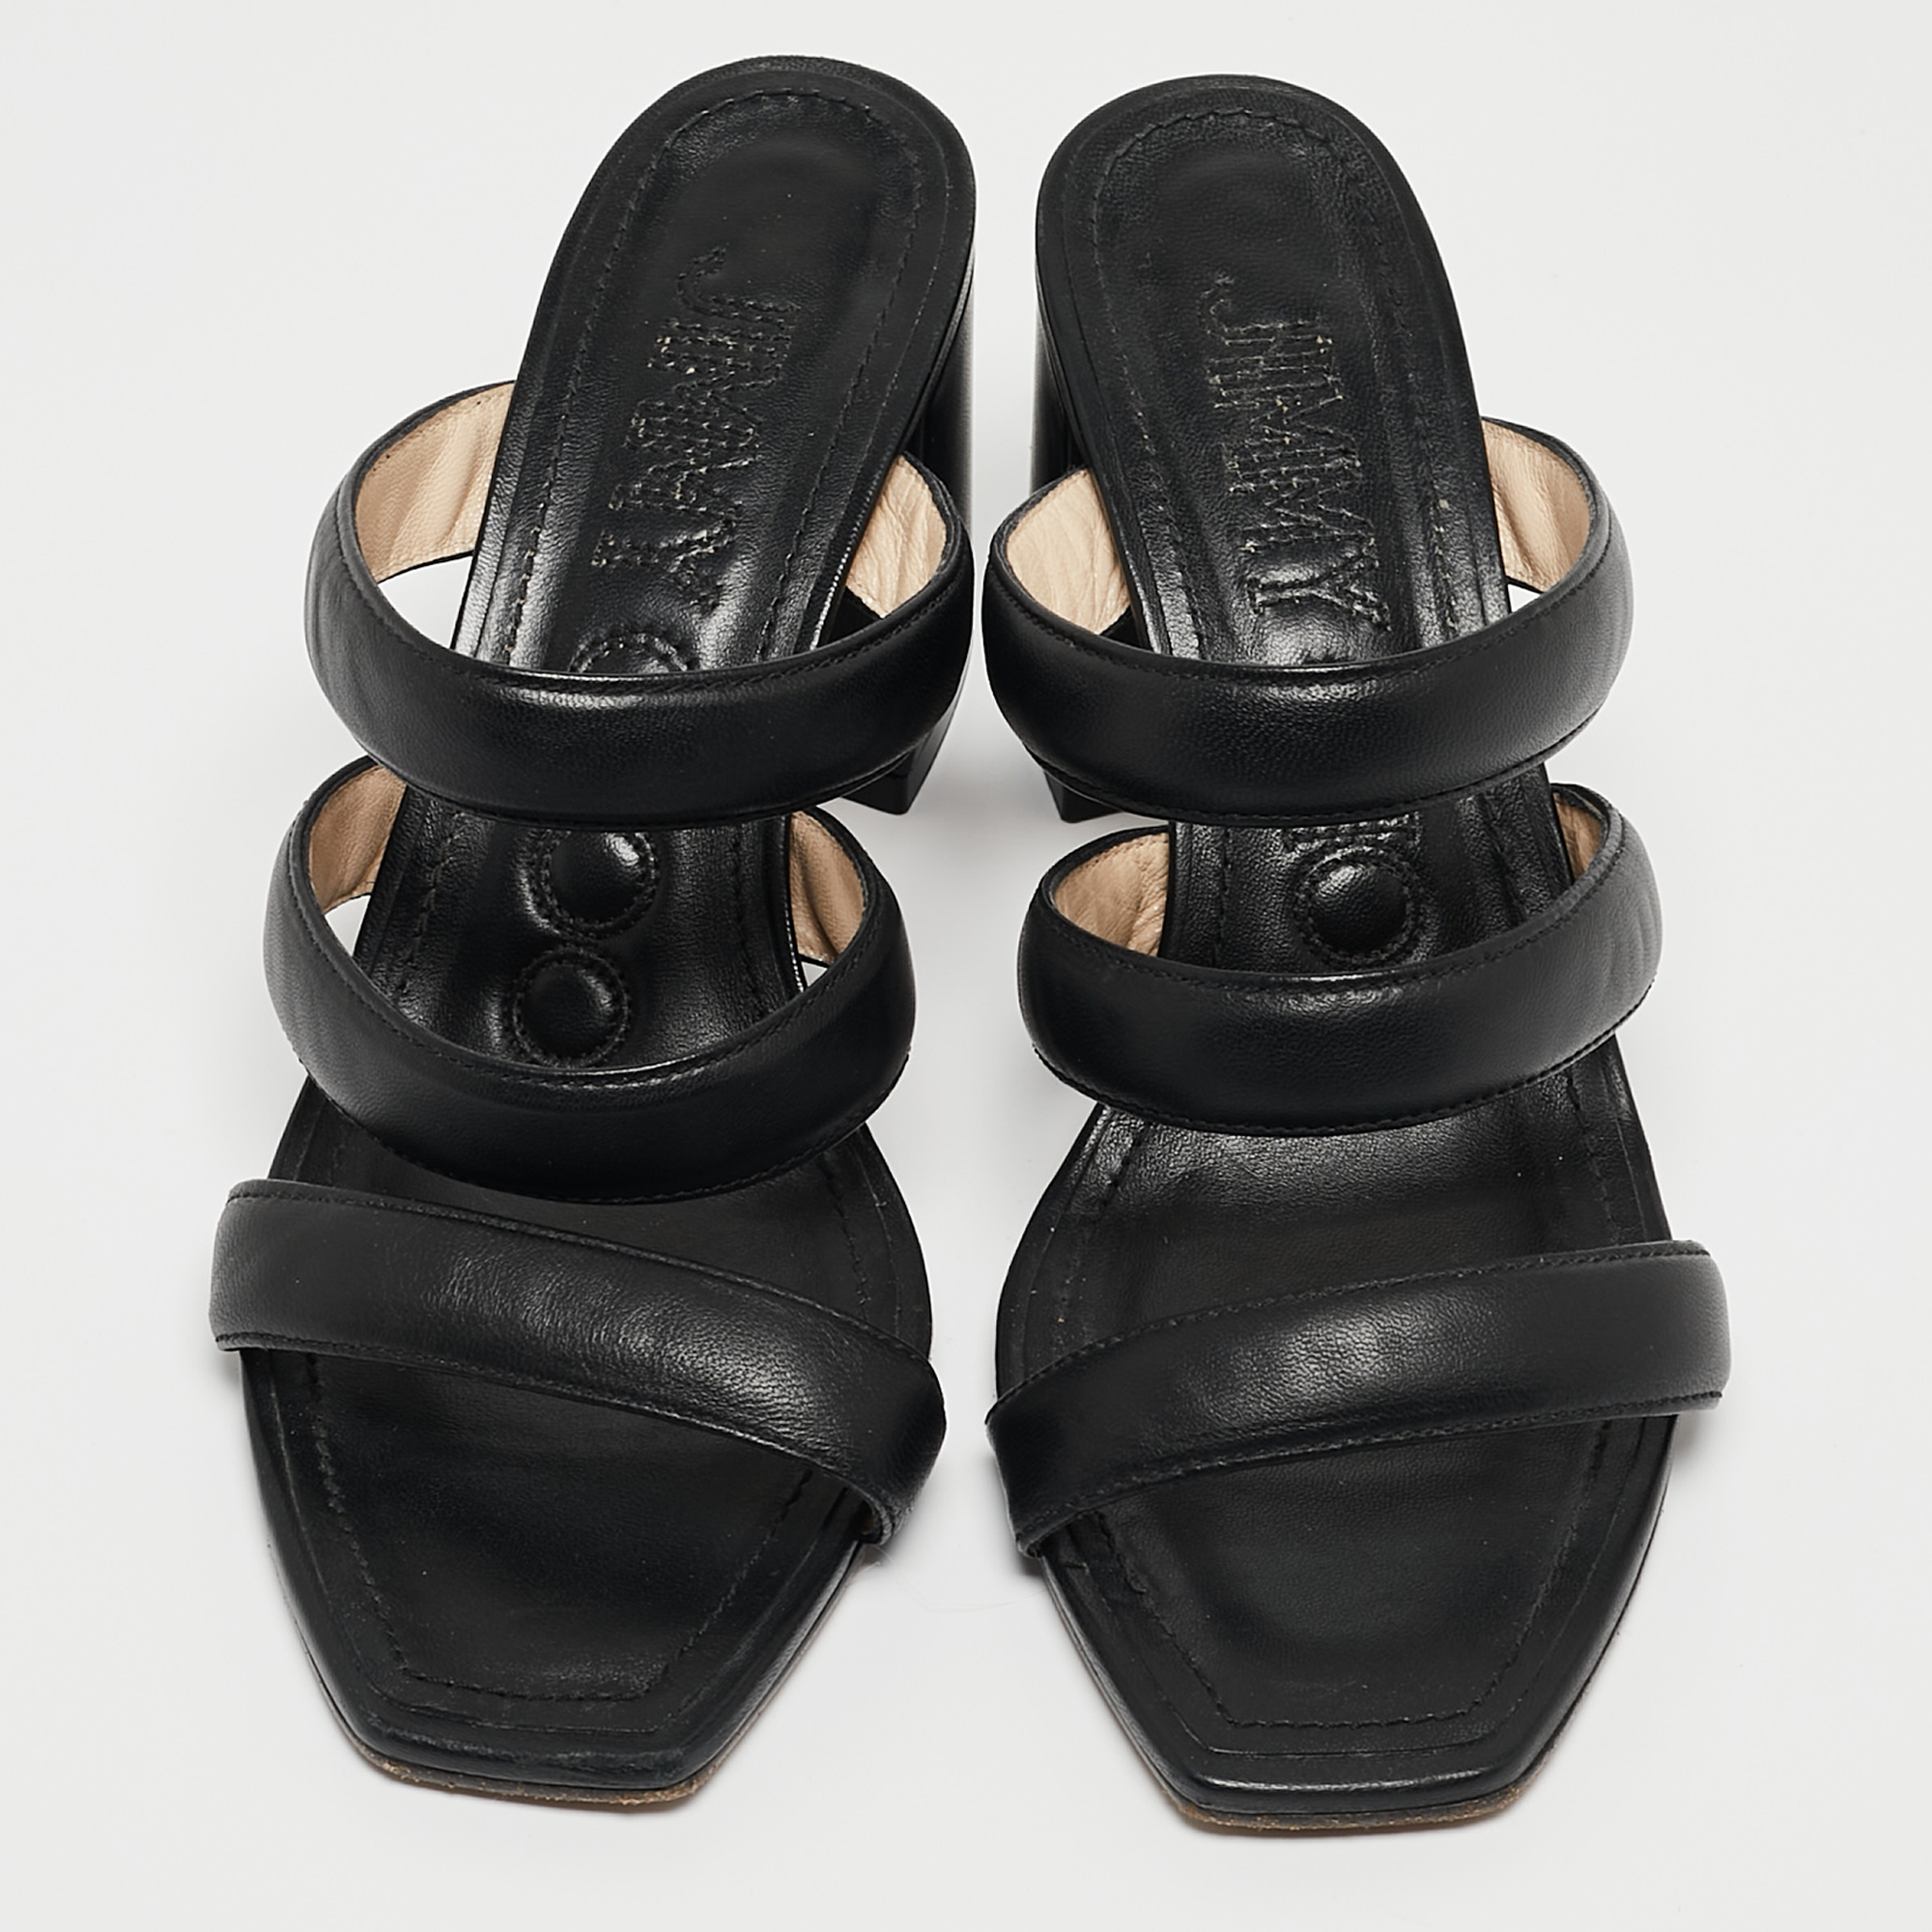 Jimmy Choo Black Leather Auna Slide Sandals Size 38.5